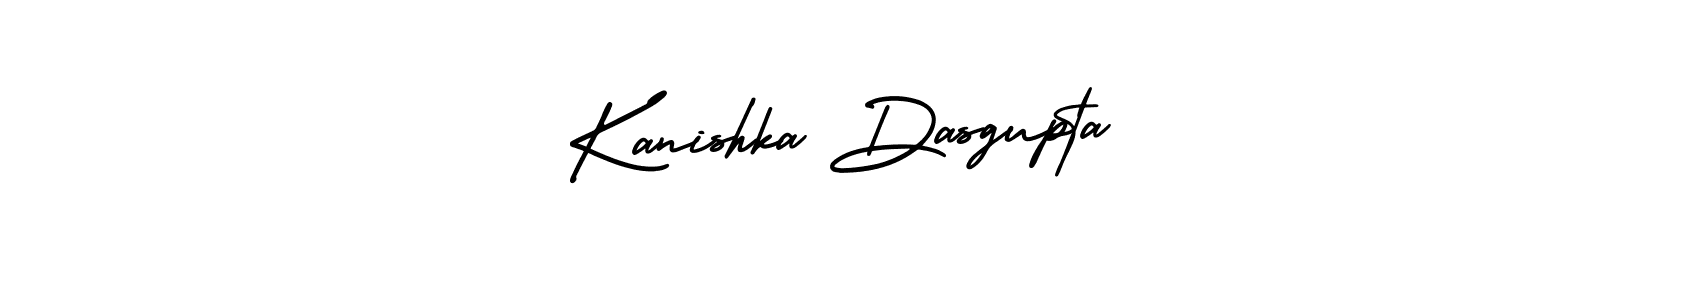 Use a signature maker to create a handwritten signature online. With this signature software, you can design (AmerikaSignatureDemo-Regular) your own signature for name Kanishka Dasgupta. Kanishka Dasgupta signature style 3 images and pictures png